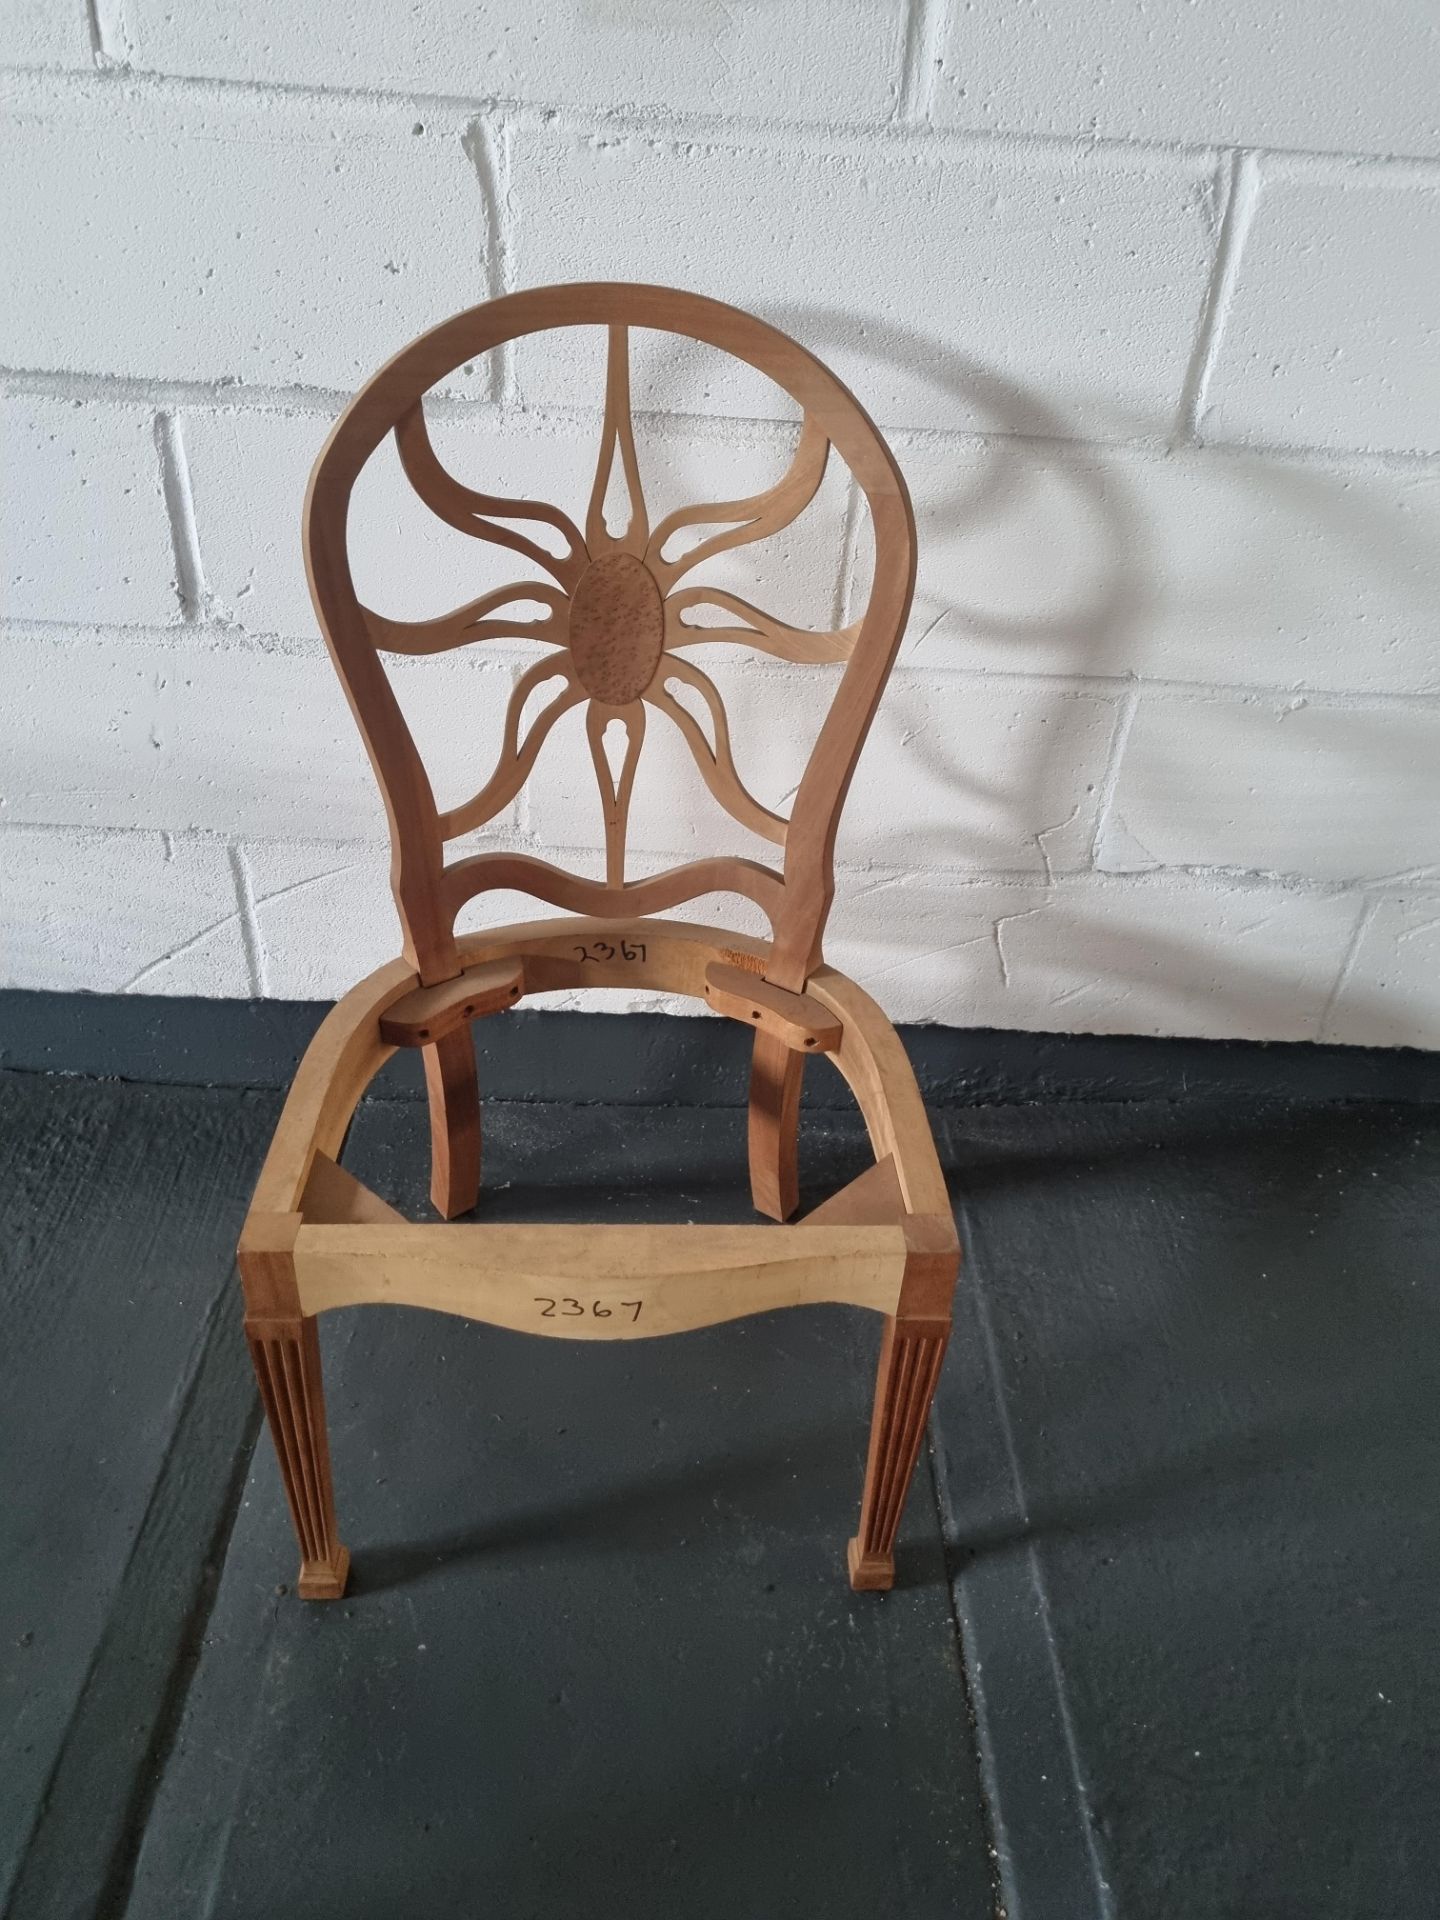 Arthur Brett Unupholstered & Unfinished Sunburst Side Chair George III Style The Unusual Design - Bild 3 aus 5